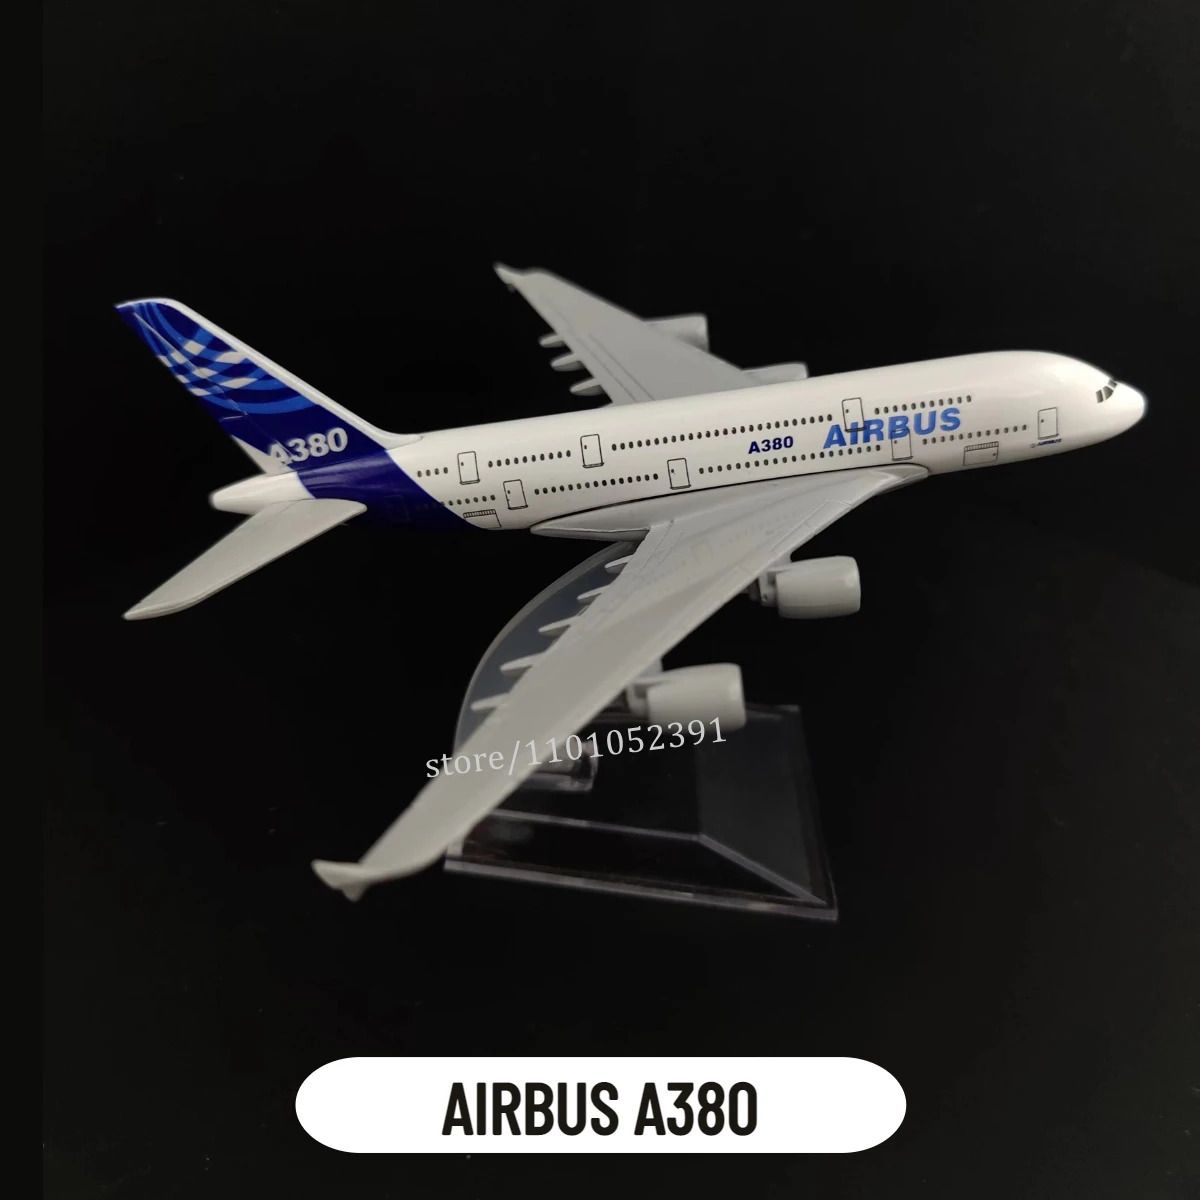 22.Airbus A380